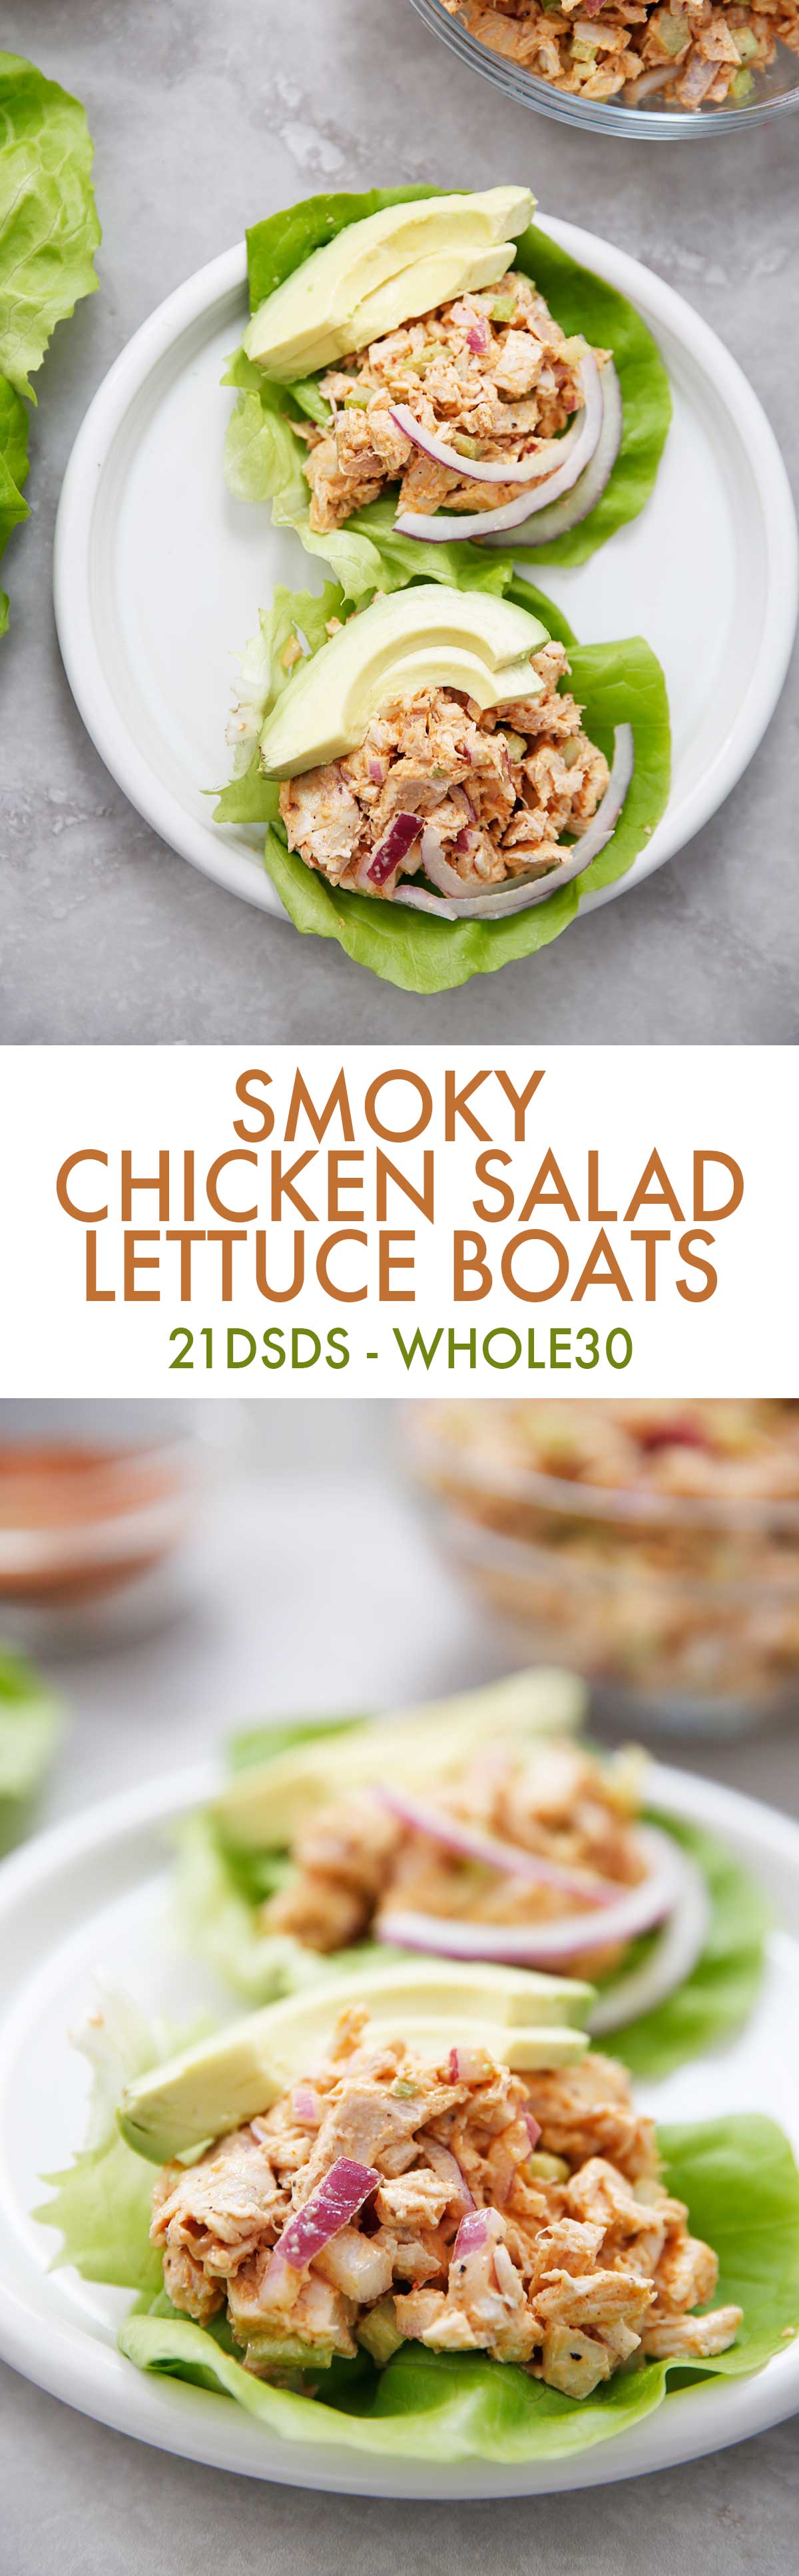 Libby's Spreadables Chicken Salad Recipe